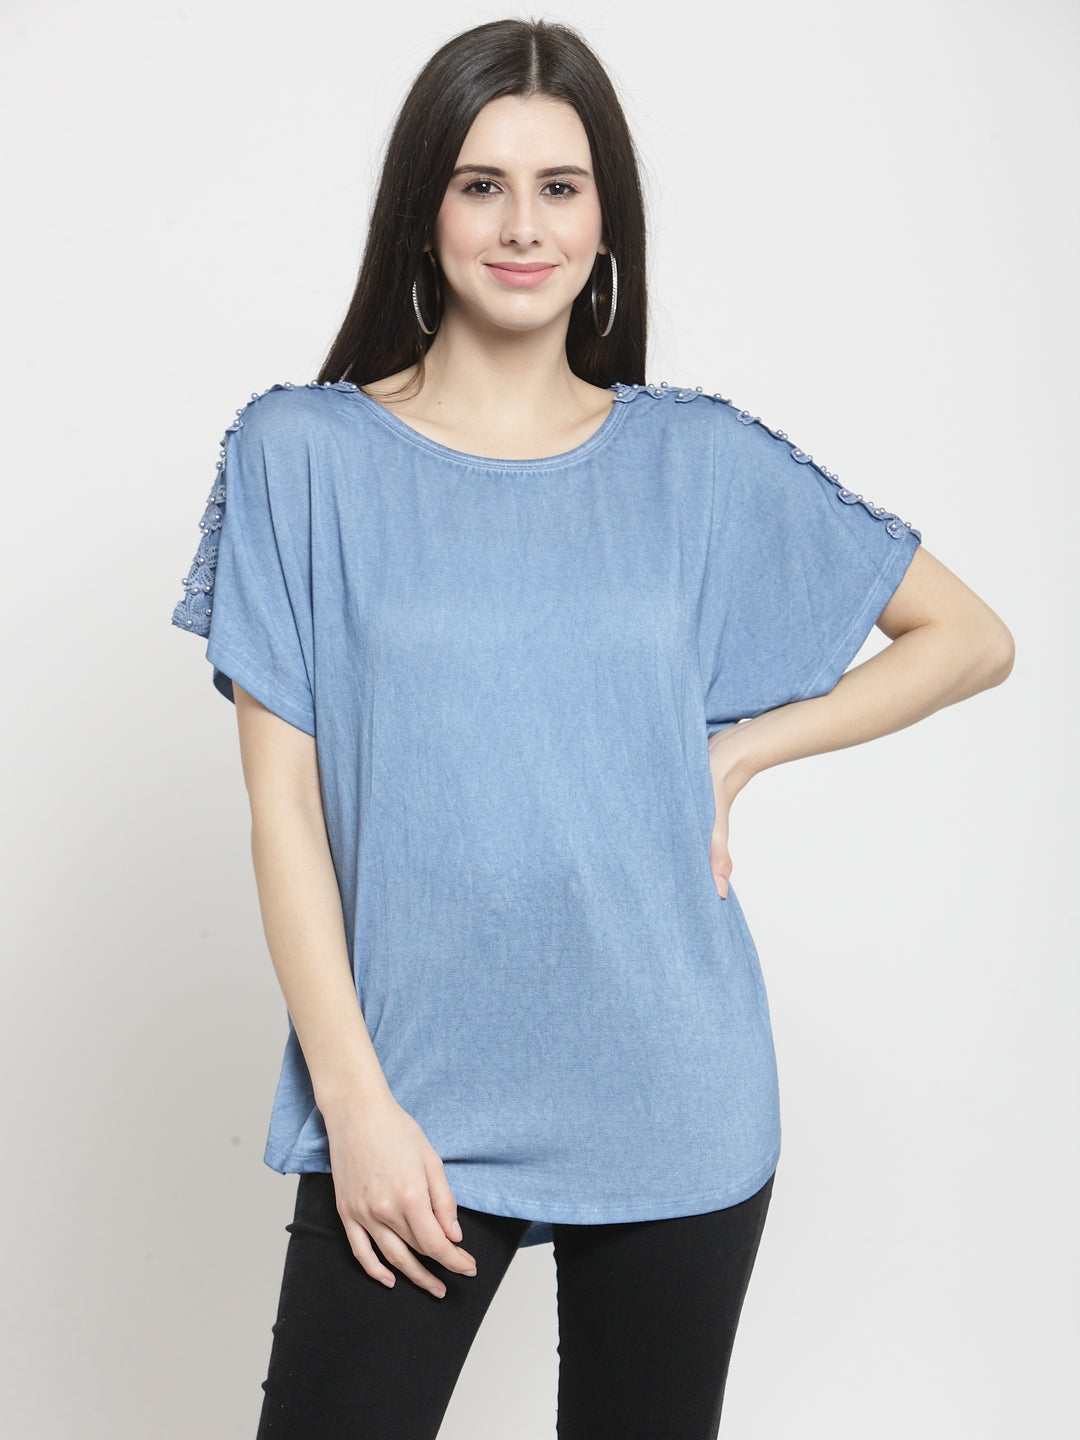 Women Blue Solid Round Neck Regular Fit T-Shirt